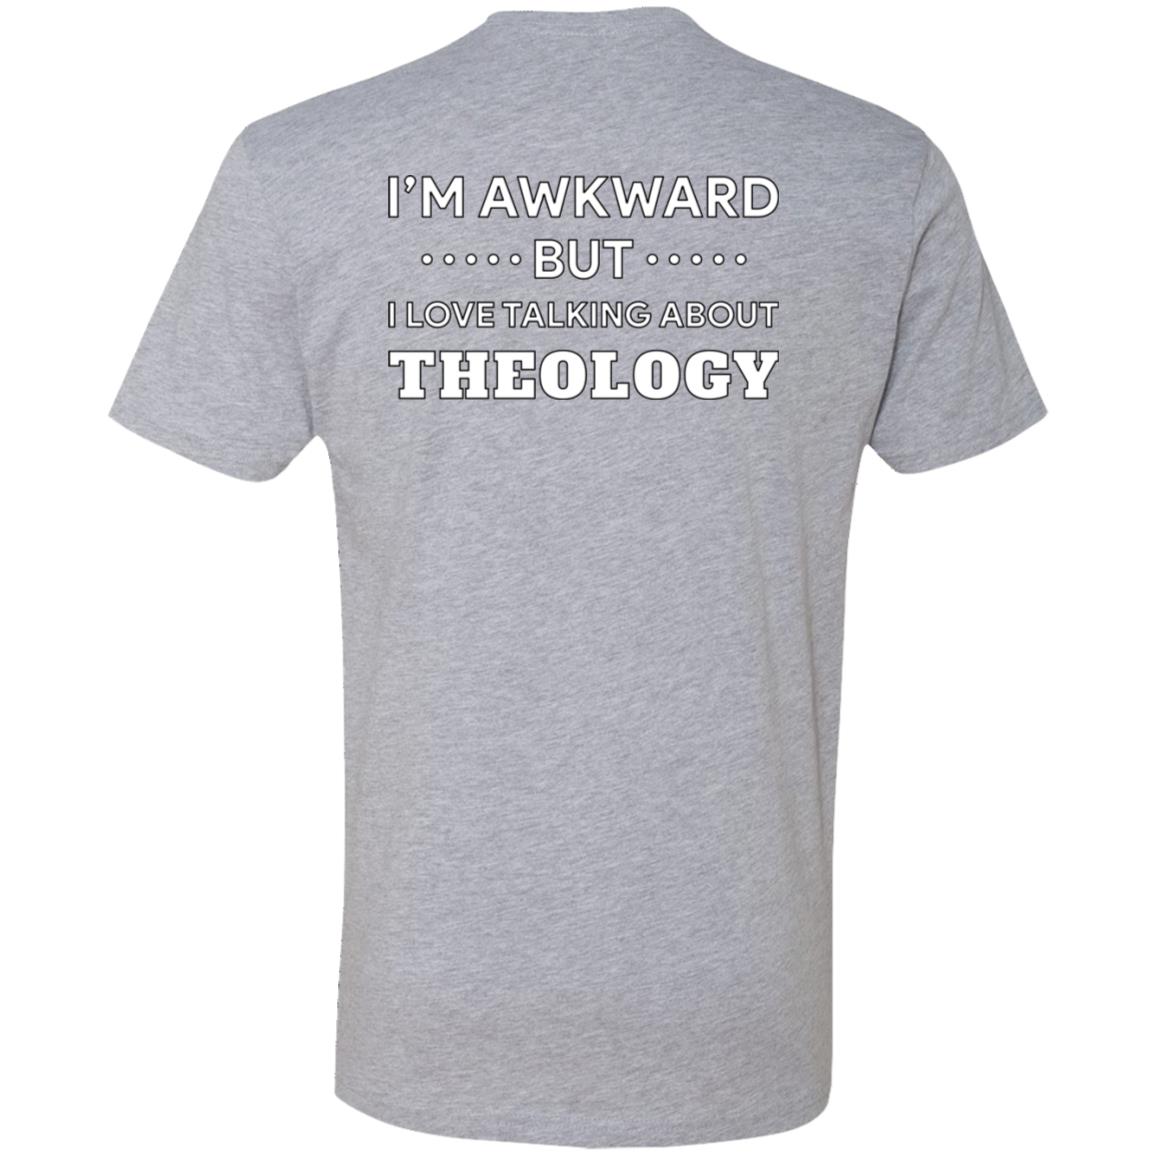 Awkward but Love Theology (Unisex Tee)